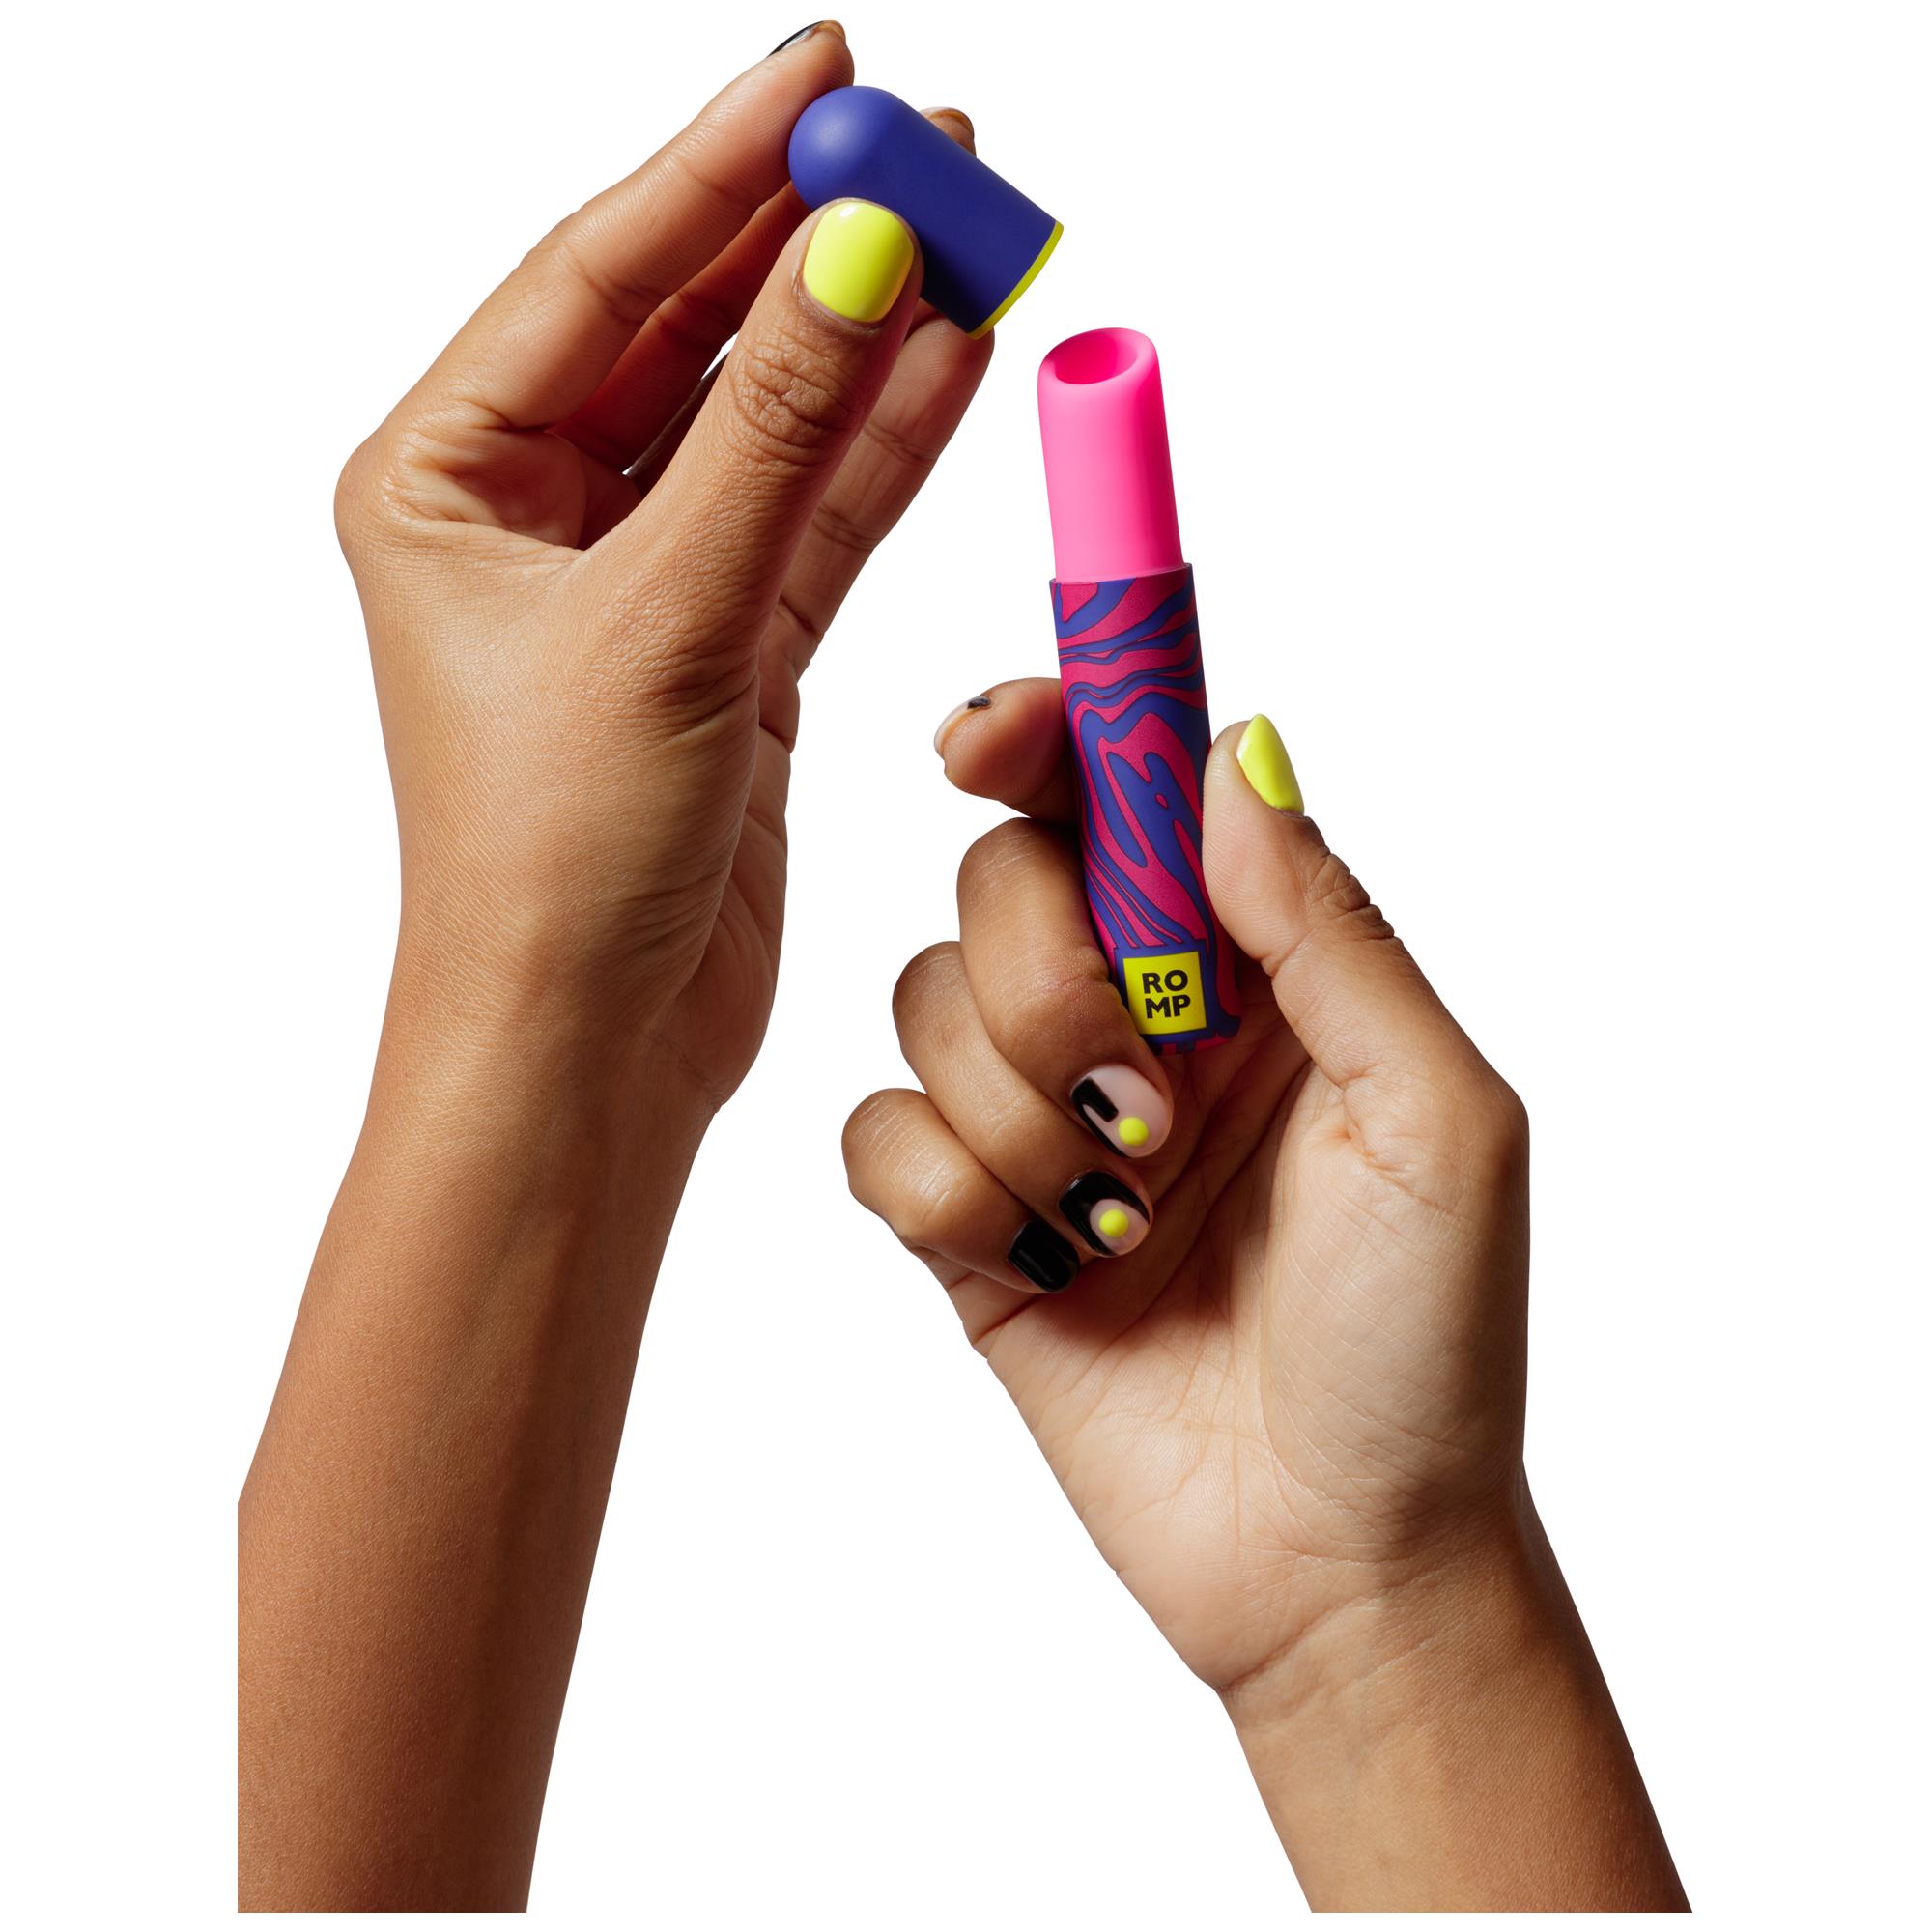 Romp Lipstick Neon Pink | Vibrator | Intimast